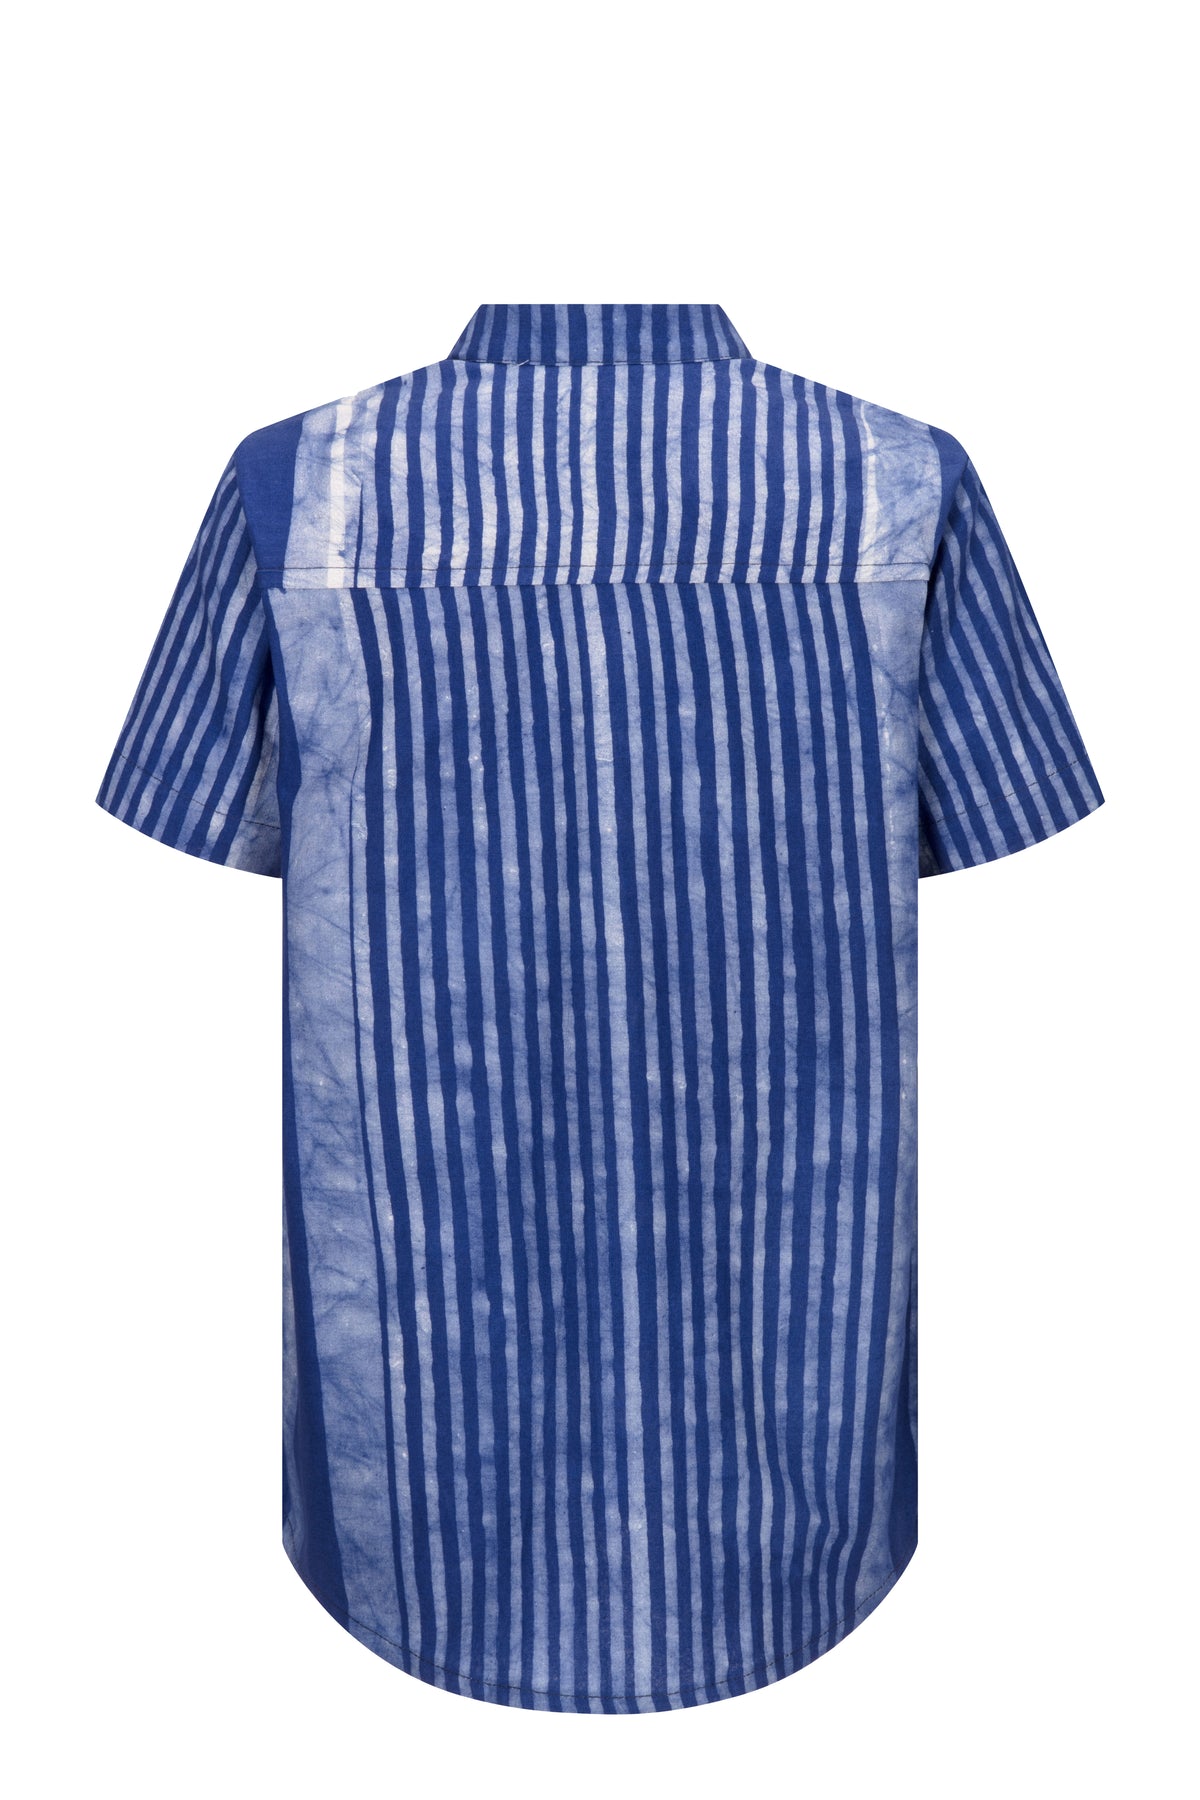 Boys shirt and shorts set- Tie Dye - OHEMA OHENE AFRICAN INSPIRED FASHION